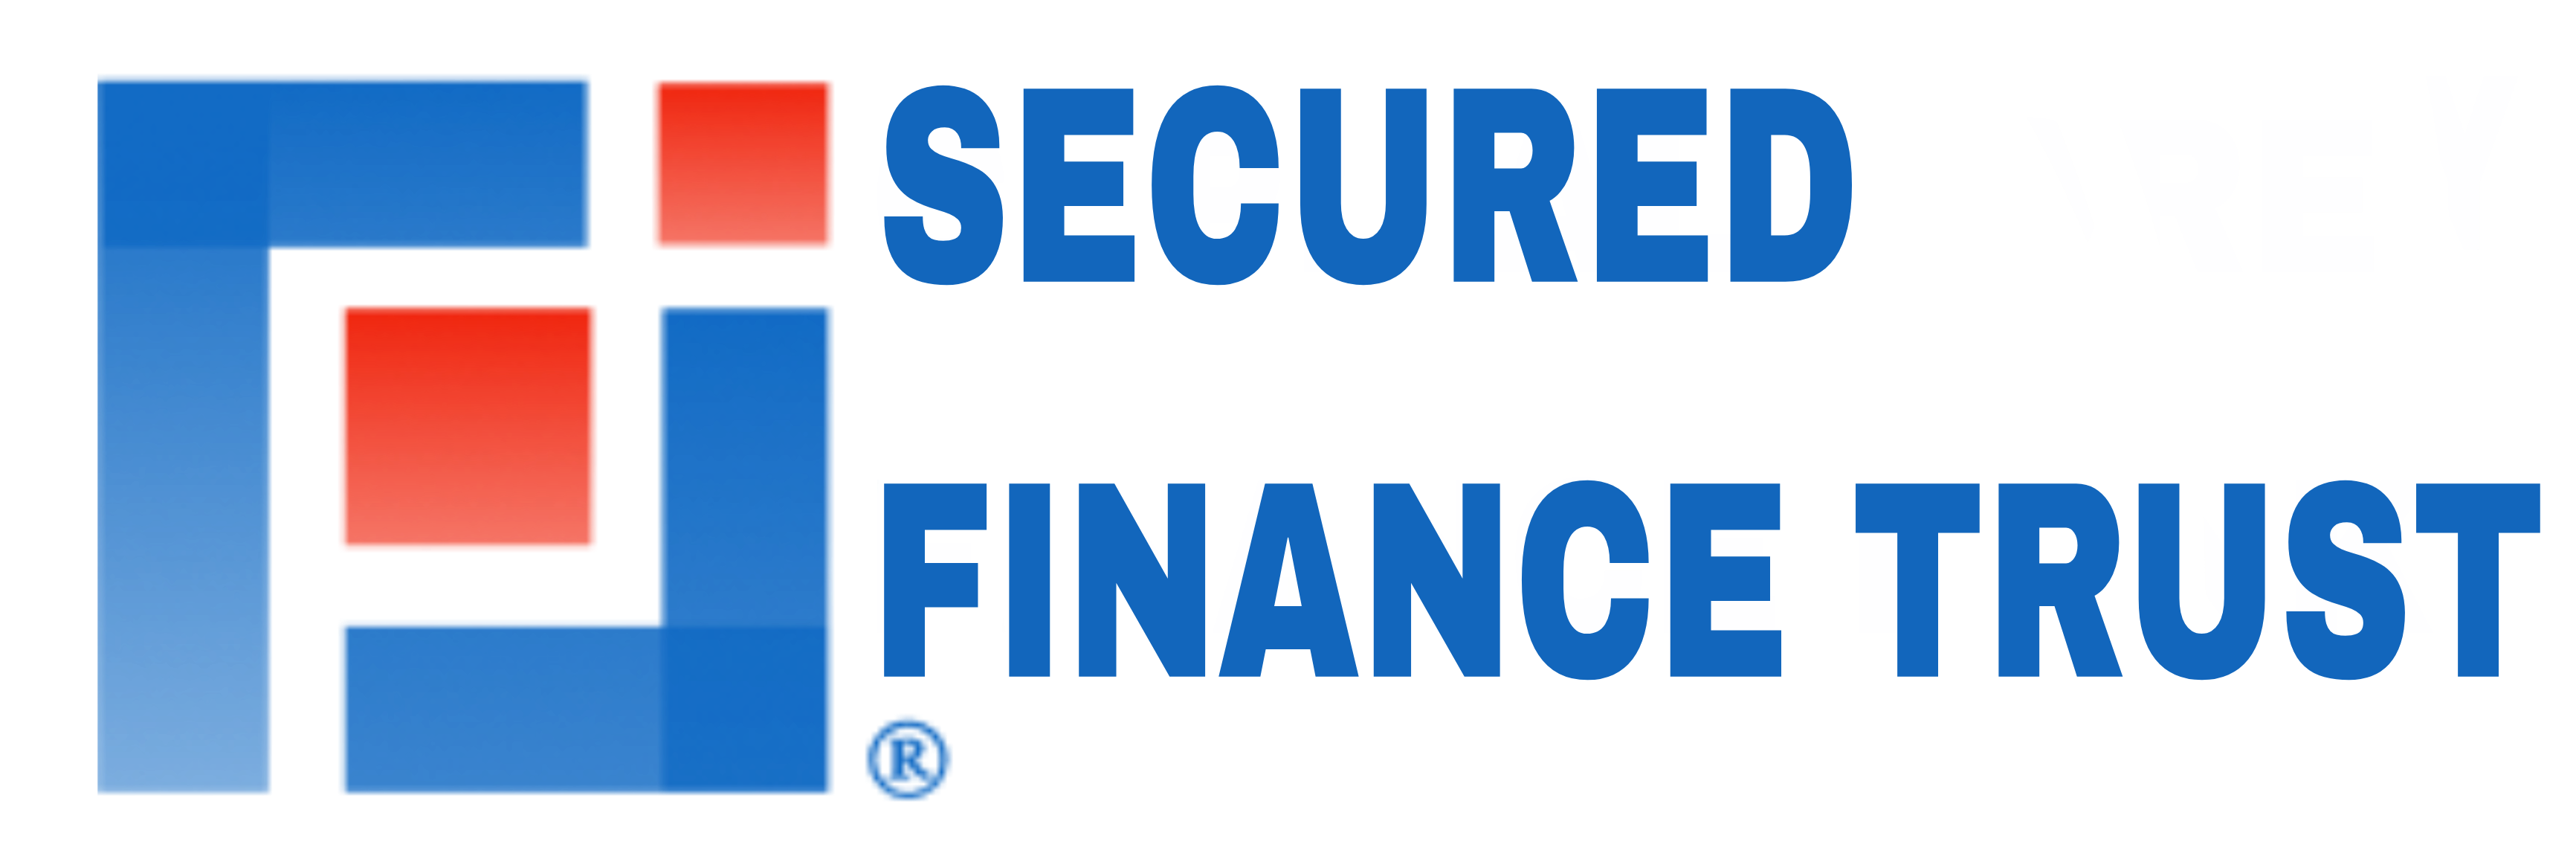 Secured Finance Trust  